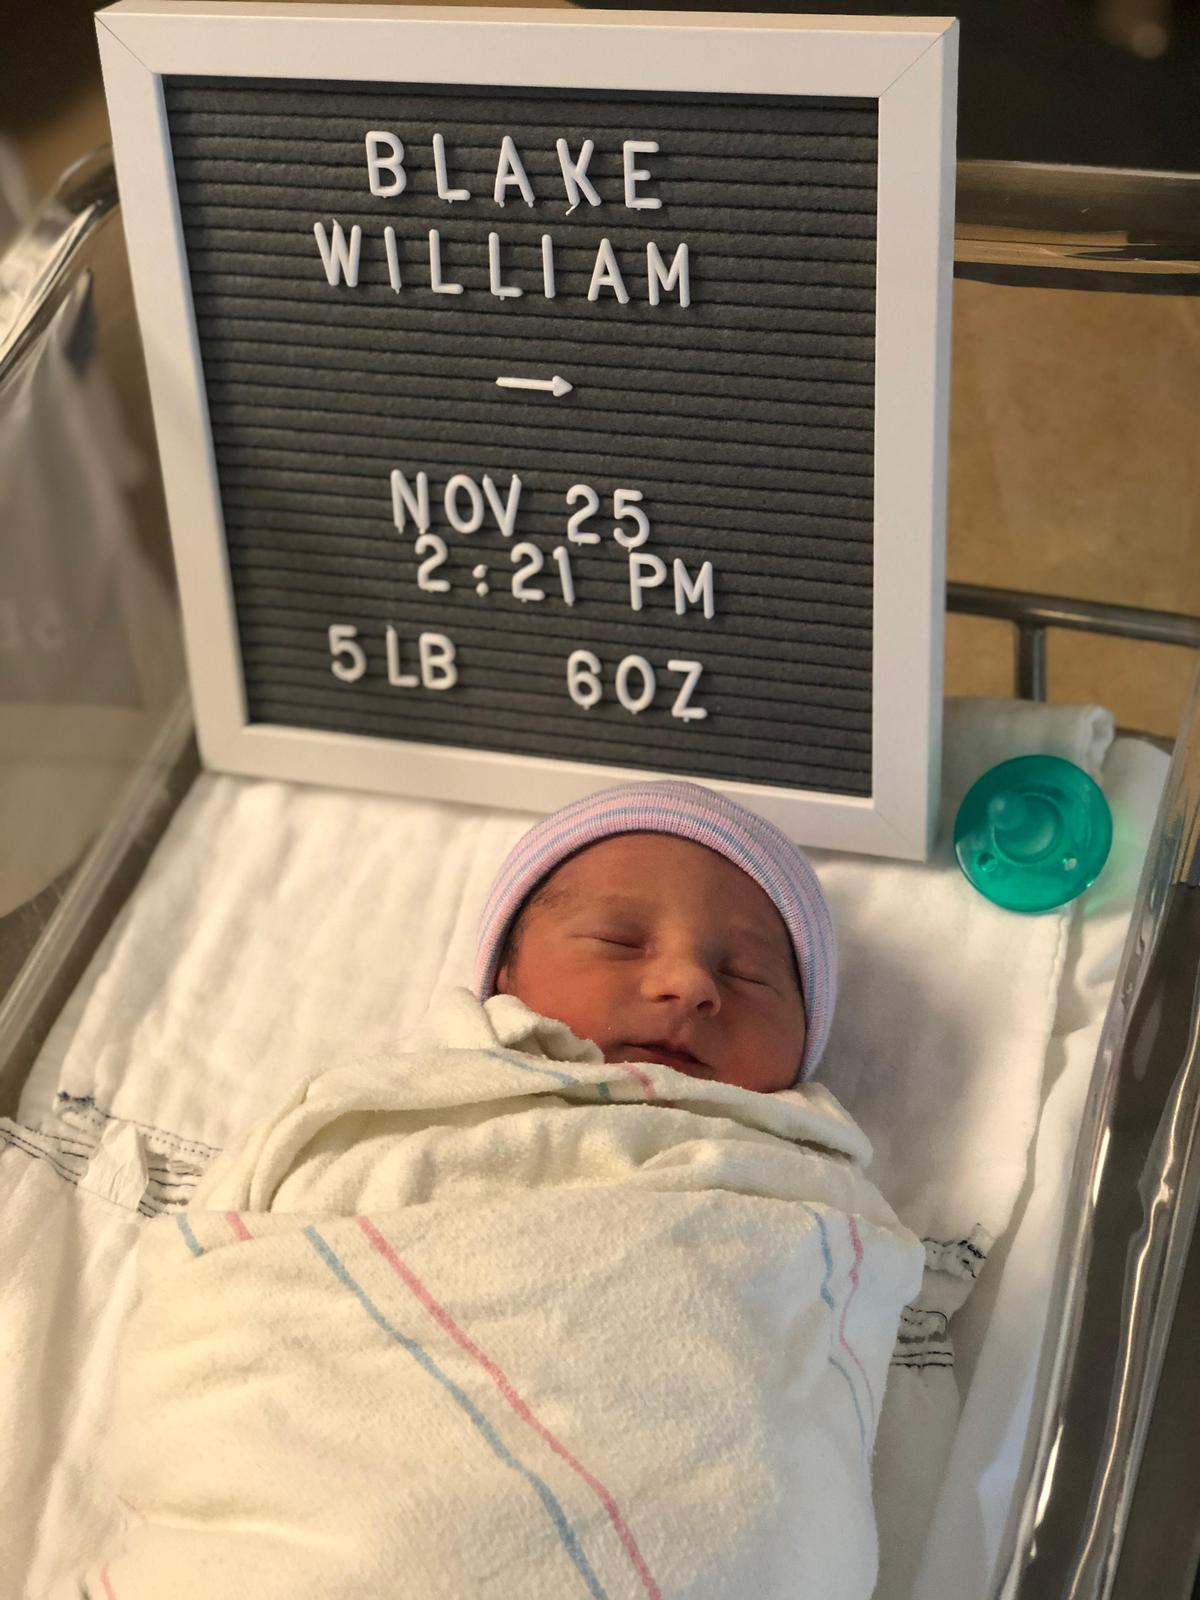 Baby Blake William. (Courtesy of <a href="https://www.facebook.com/jackie.latimer3">Jackie Zieman</a>)